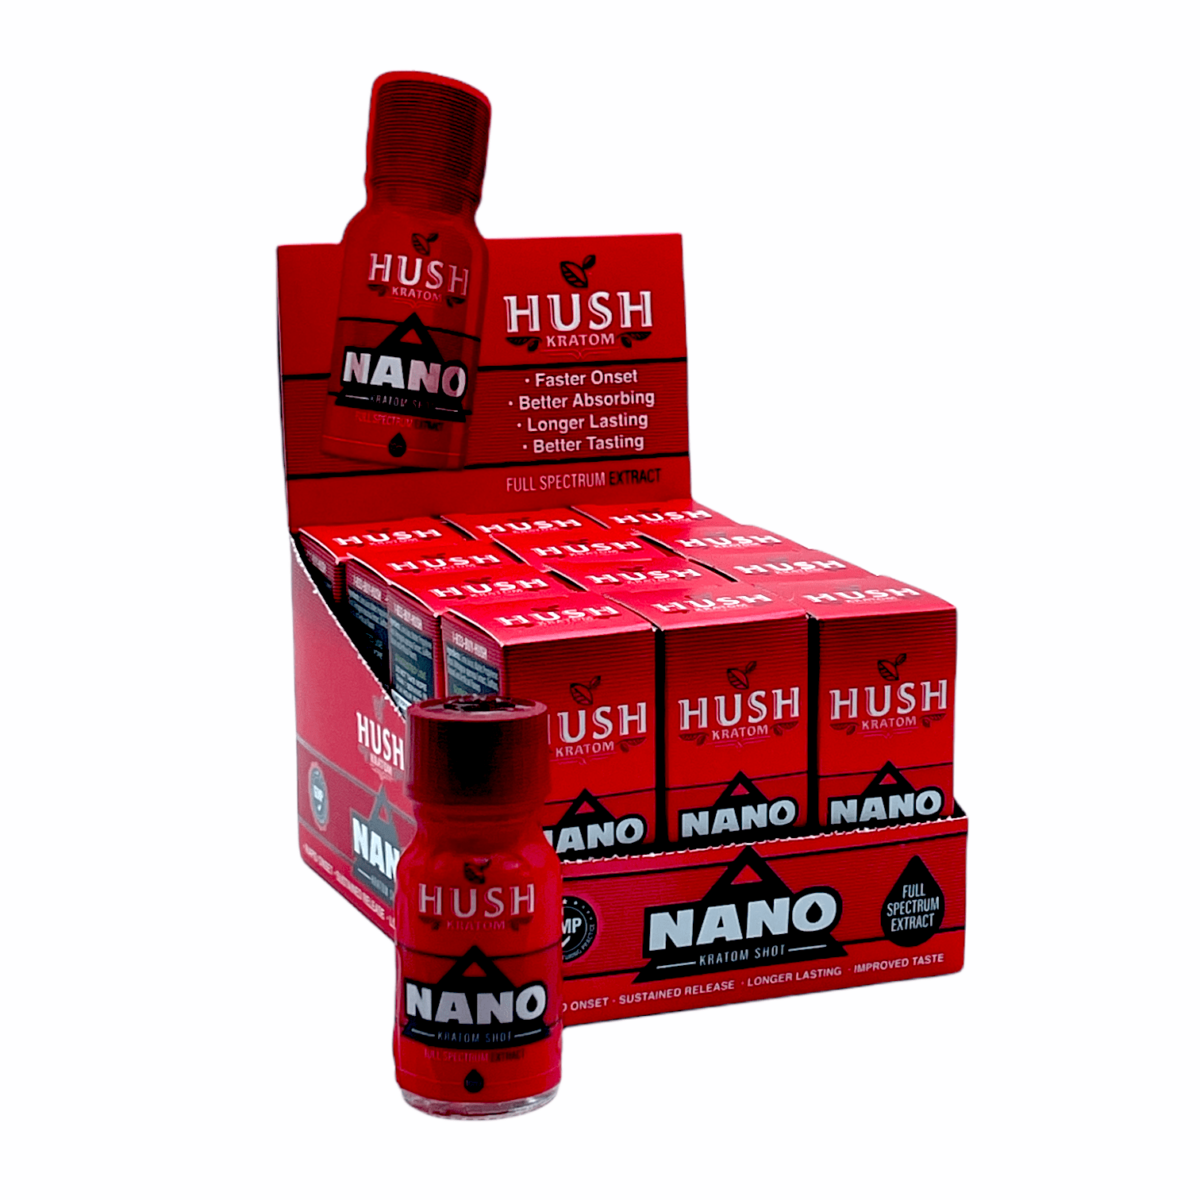 HUSH NANO Kratom Shot – display box